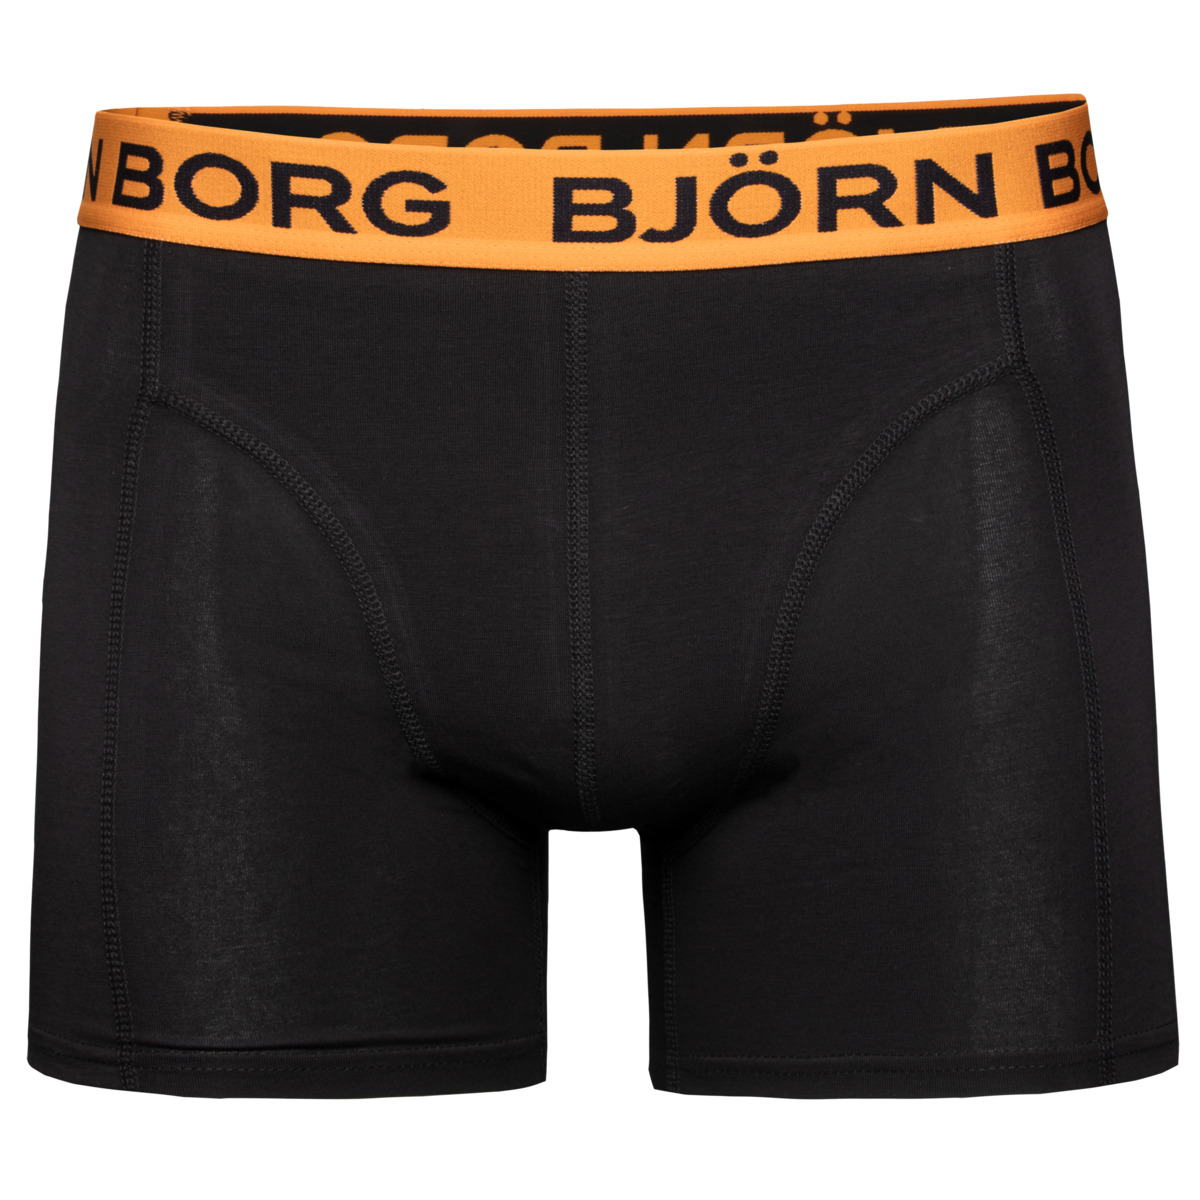 Björn Borg Cotton Stretch Boxer 5er Pack Boxershorts schwarz